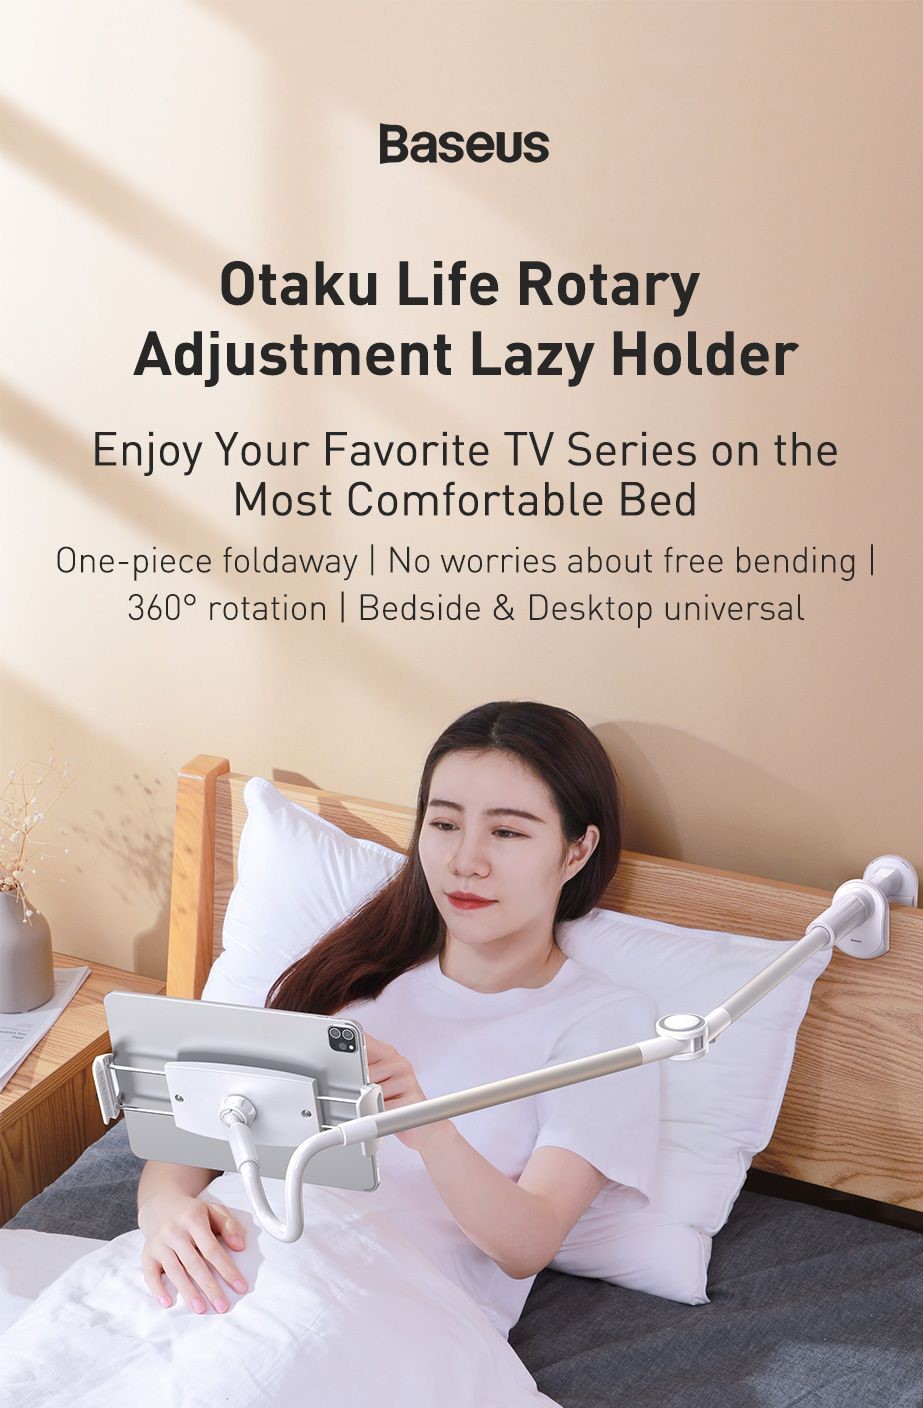 baseus otaku life rotary adjustment lazy holder applicable for phone pad 2